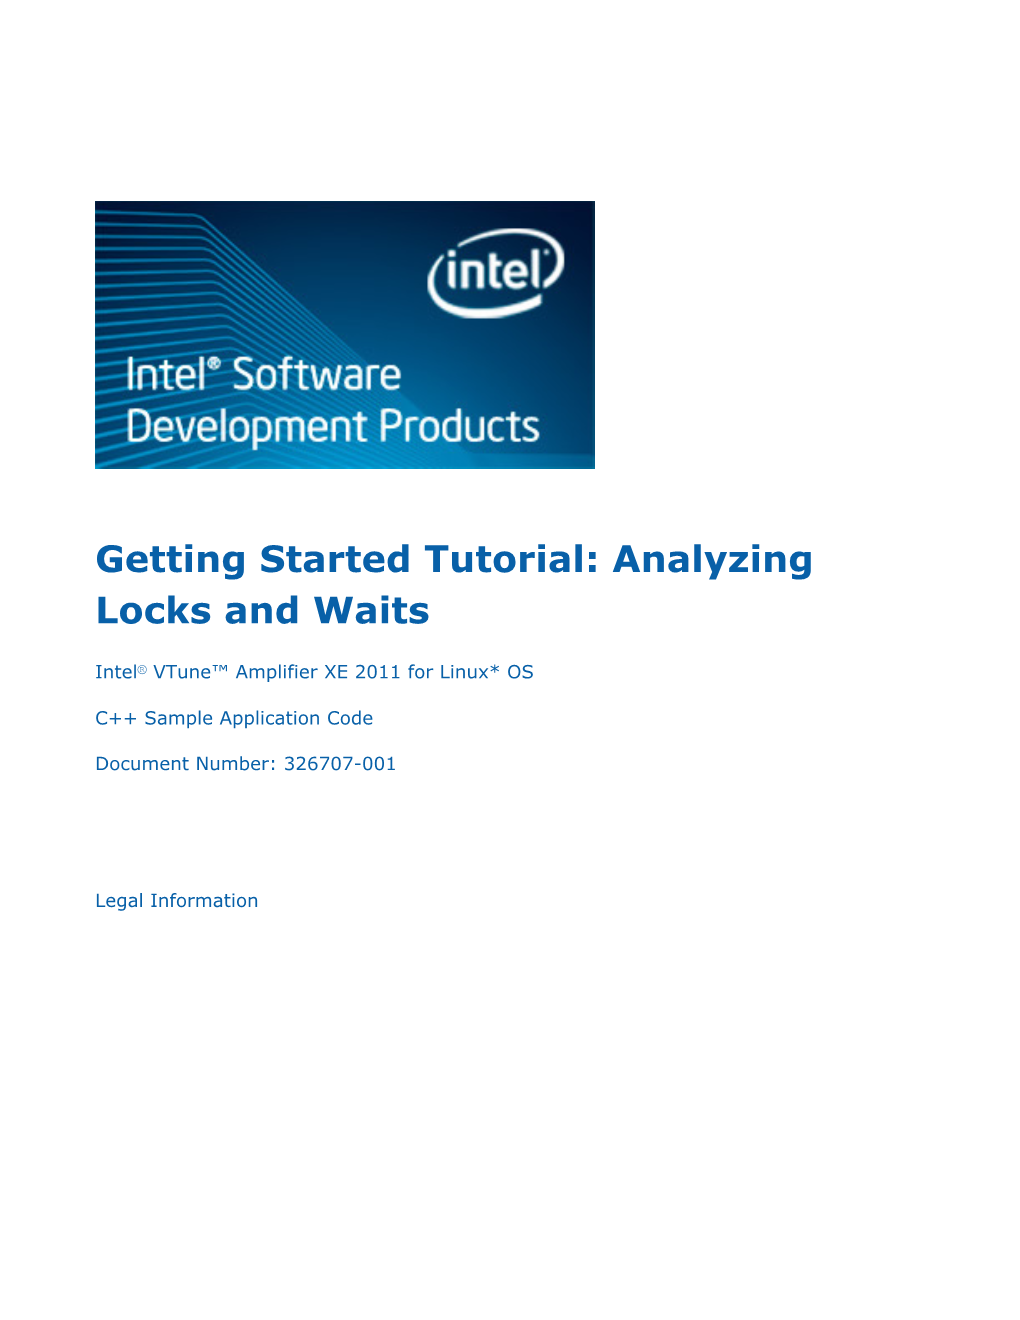 Analyzing Locks and Waits with Intel(R) Vtune(TM)